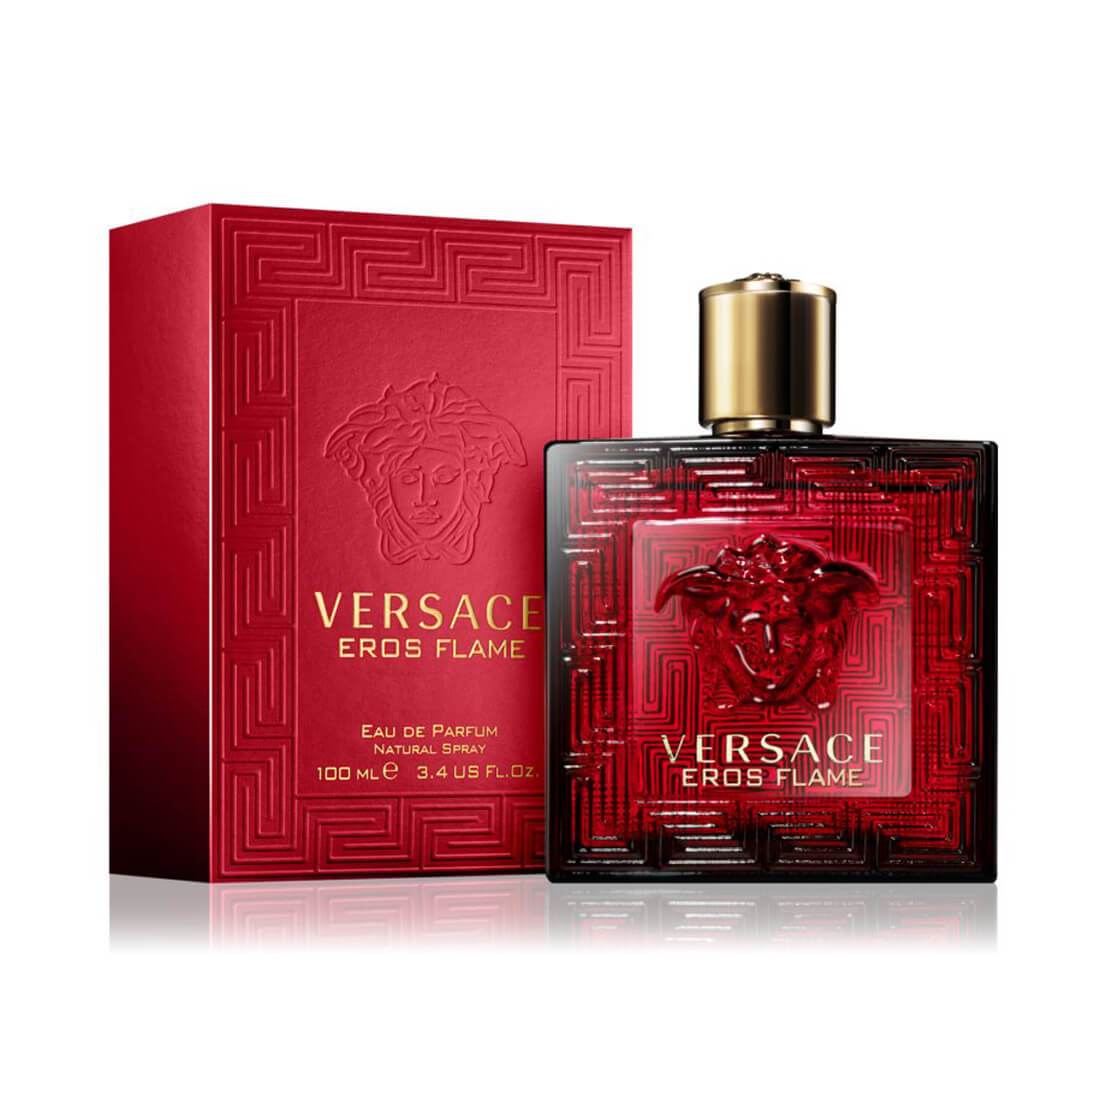 Best Versace Eros Flame Eau De Parfum Price And Reviews In | Free Nude ...